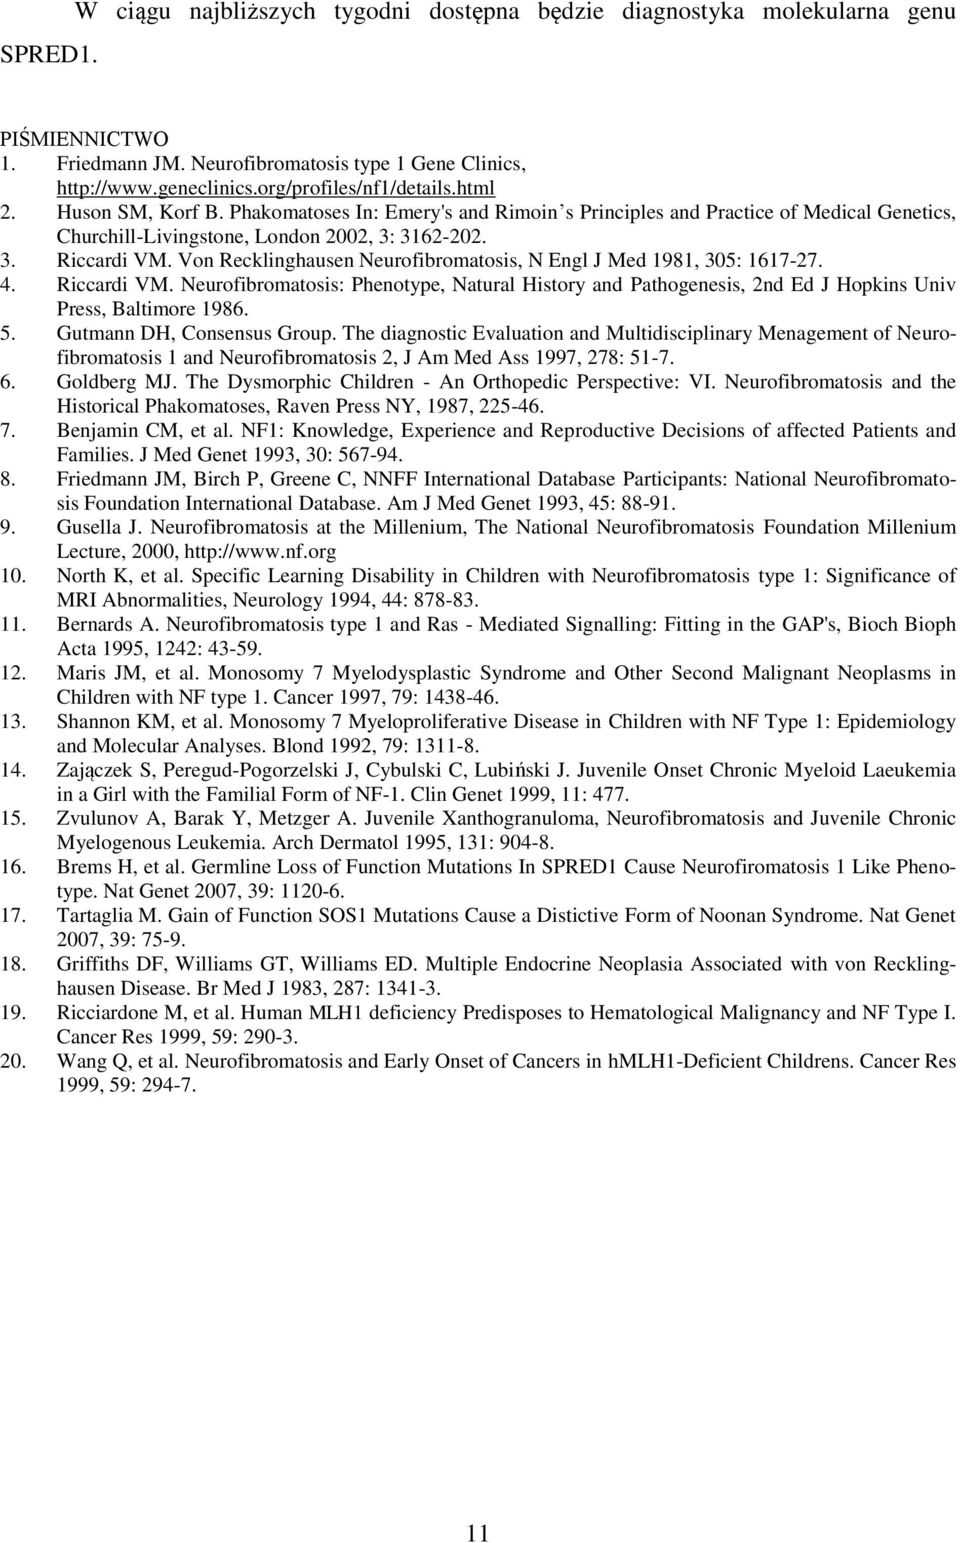 Von Recklinghausen Neurofibromatosis, N Engl J Med 1981, 305: 1617-27. 4. Riccardi VM. Neurofibromatosis: Phenotype, Natural History and Pathogenesis, 2nd Ed J Hopkins Univ Press, Baltimore 1986. 5.